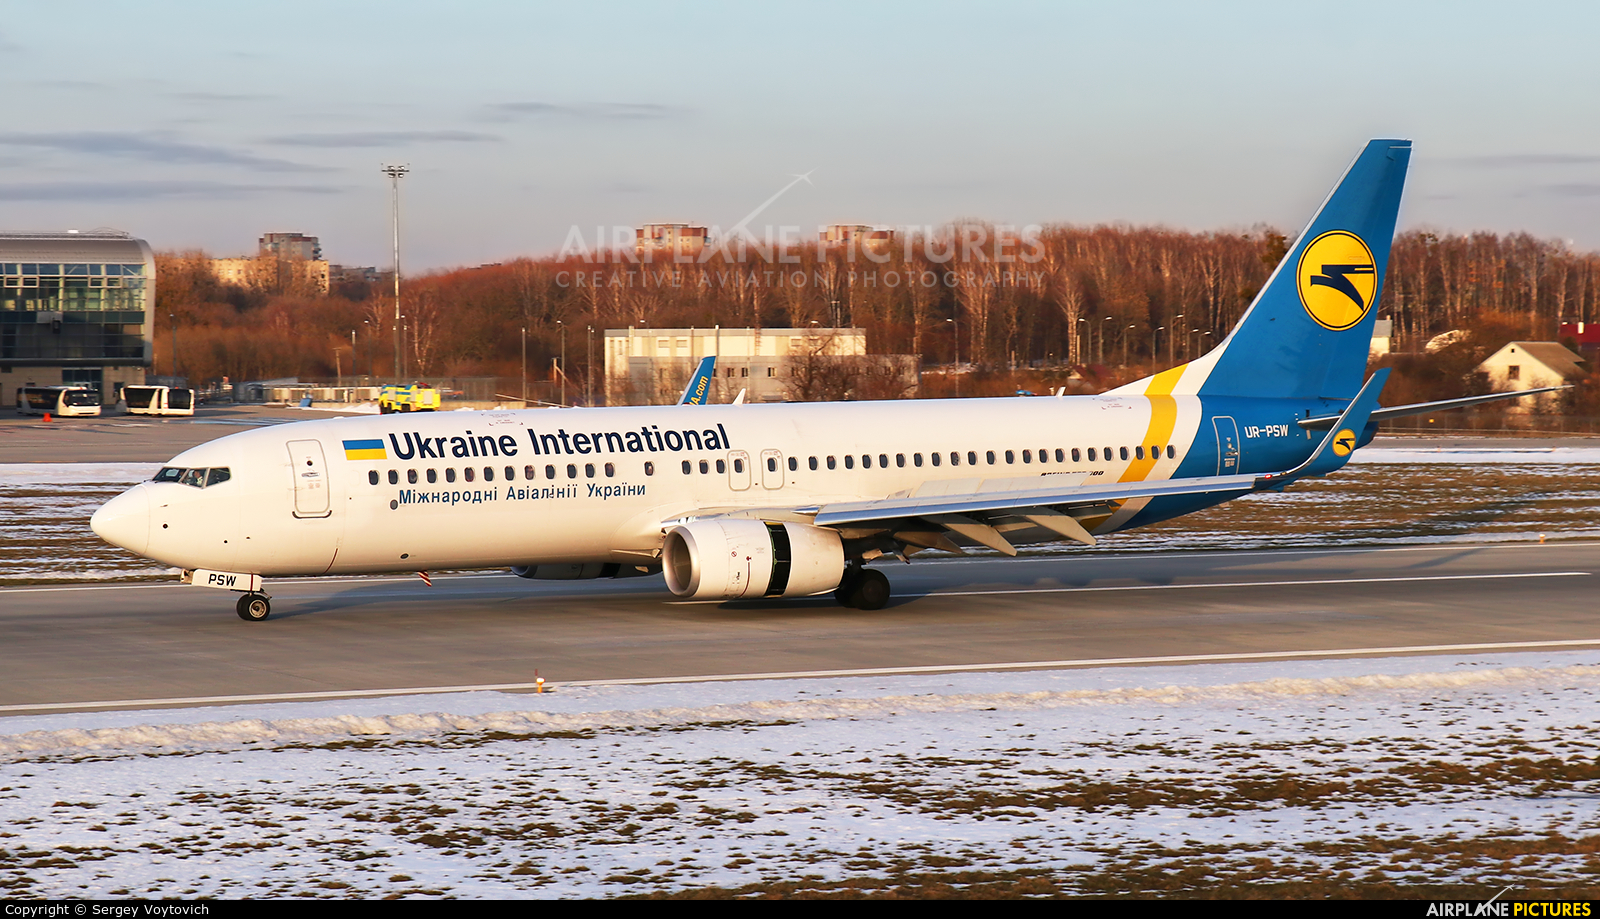 Ukraine International Airlines UR-PSW aircraft at Lviv Danylo Halytskyi International Airport (Lwów Skniłów)